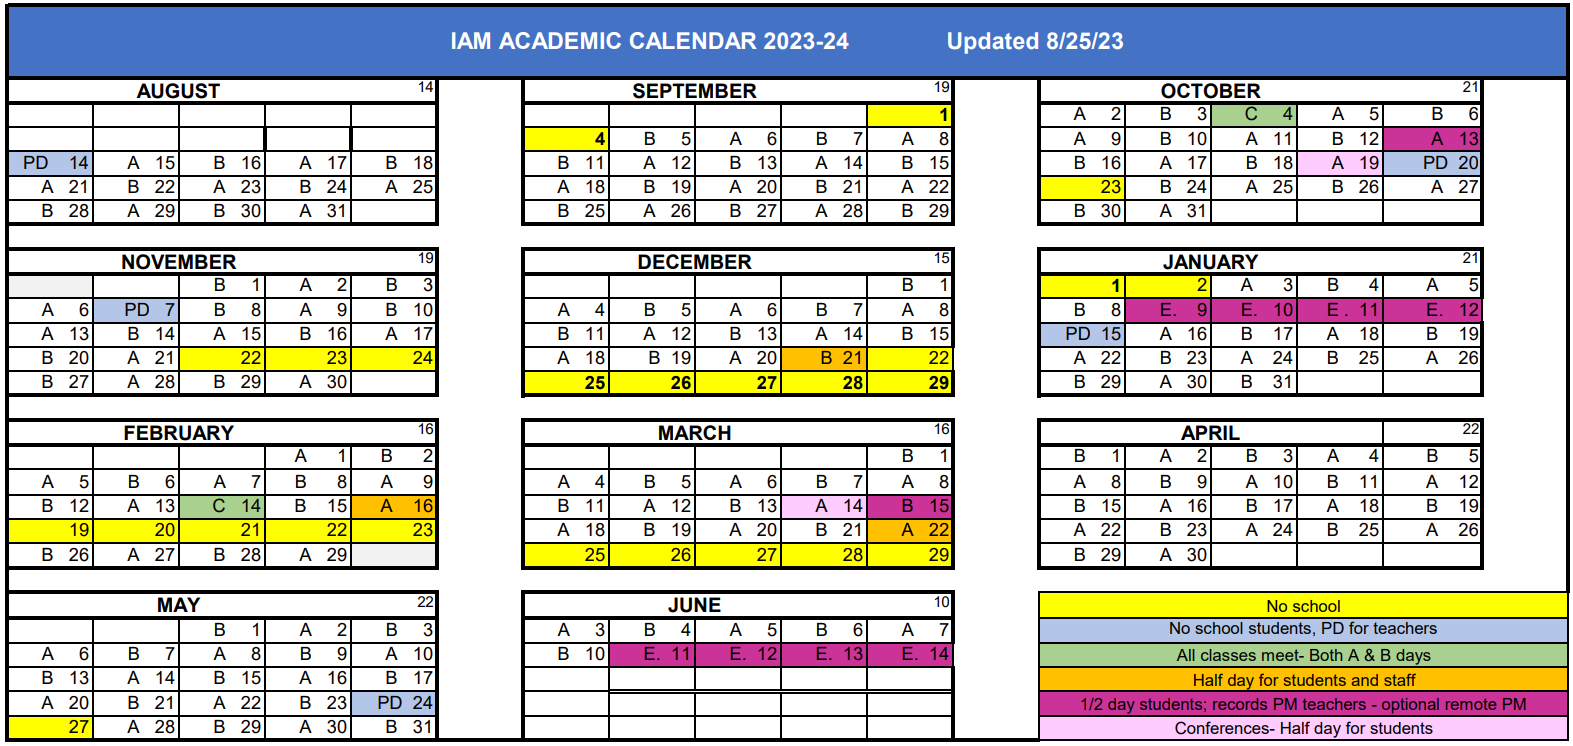 IAM Academic Calendar